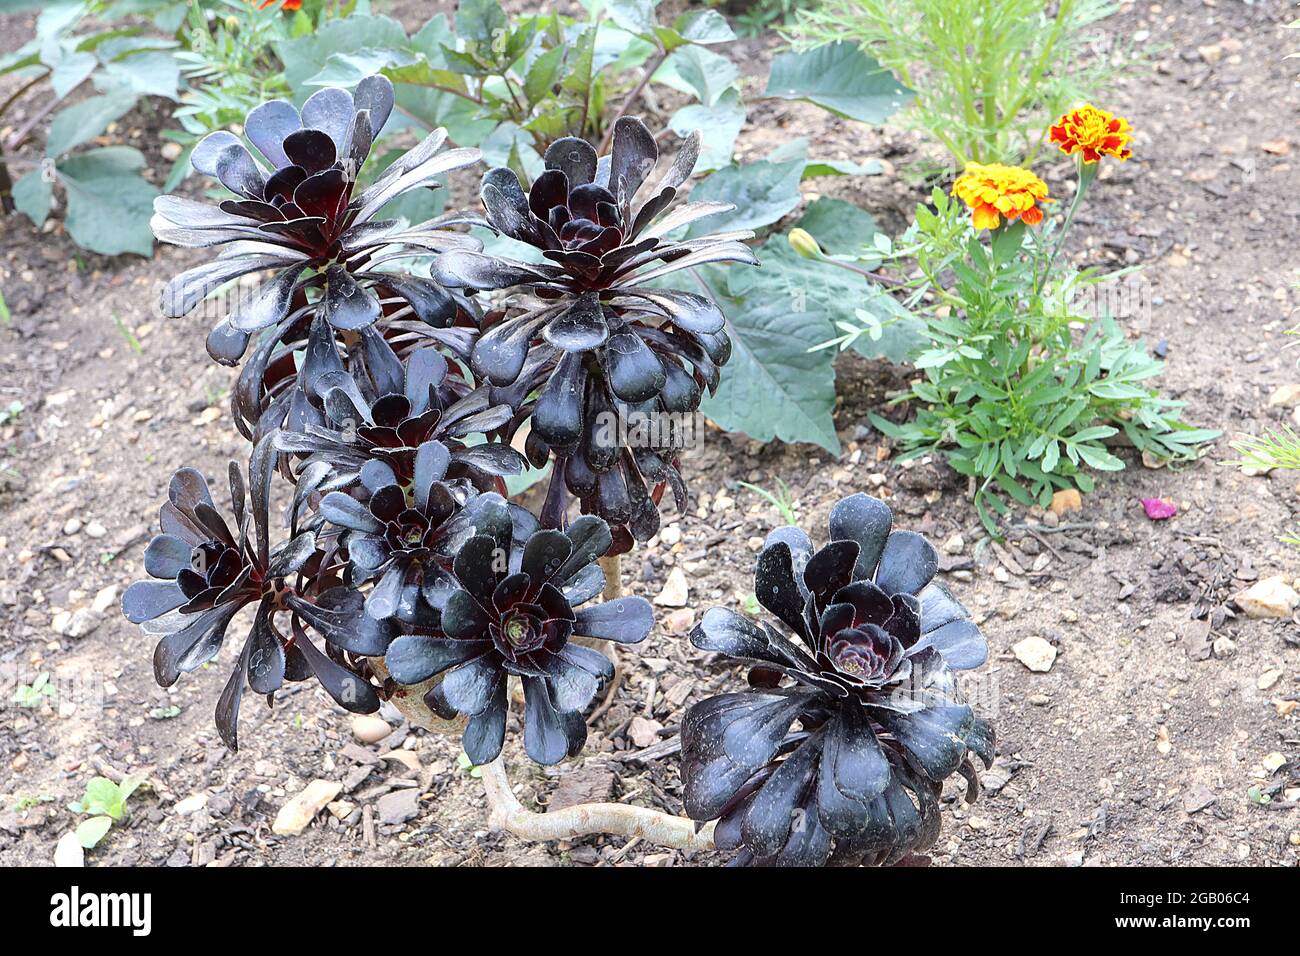 Aeonium arboreum ‘Black Rose’ houseleek tree Black Rose – rosettes of spoon-shaped black leaves on thick stems,  June, England, UK Stock Photo